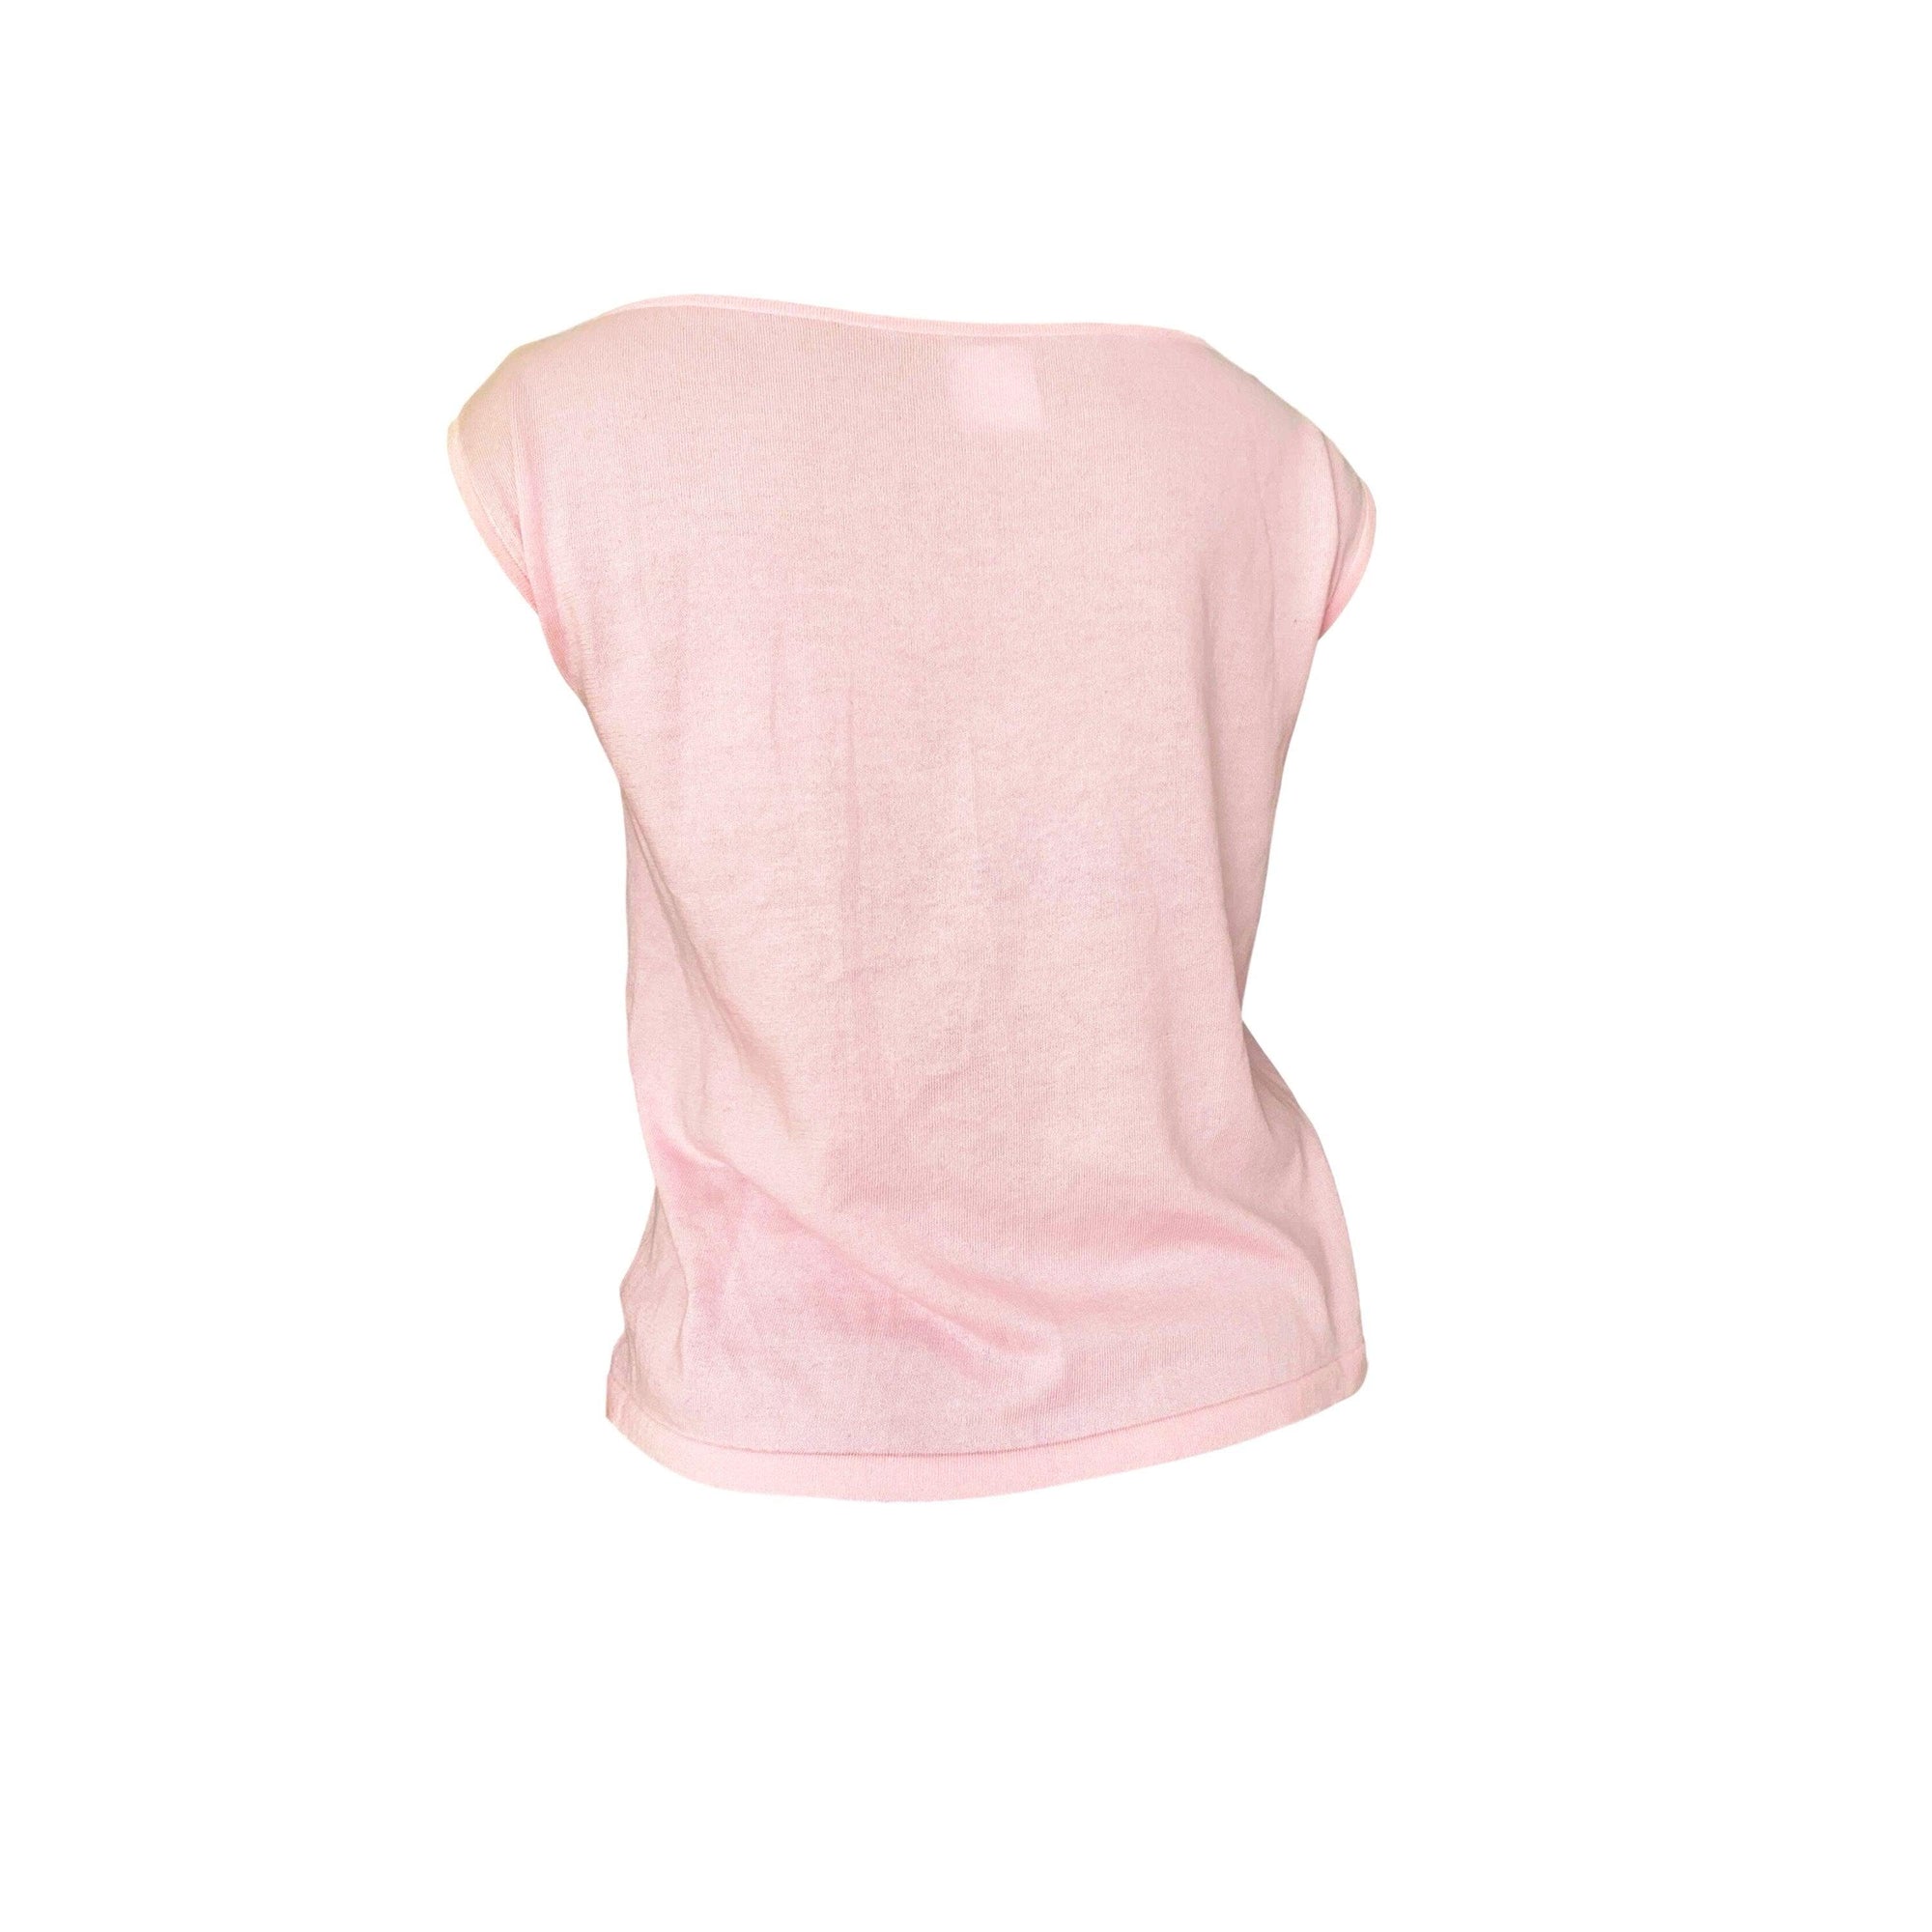 Chanel Baby Pink Logo Tank - Apparel